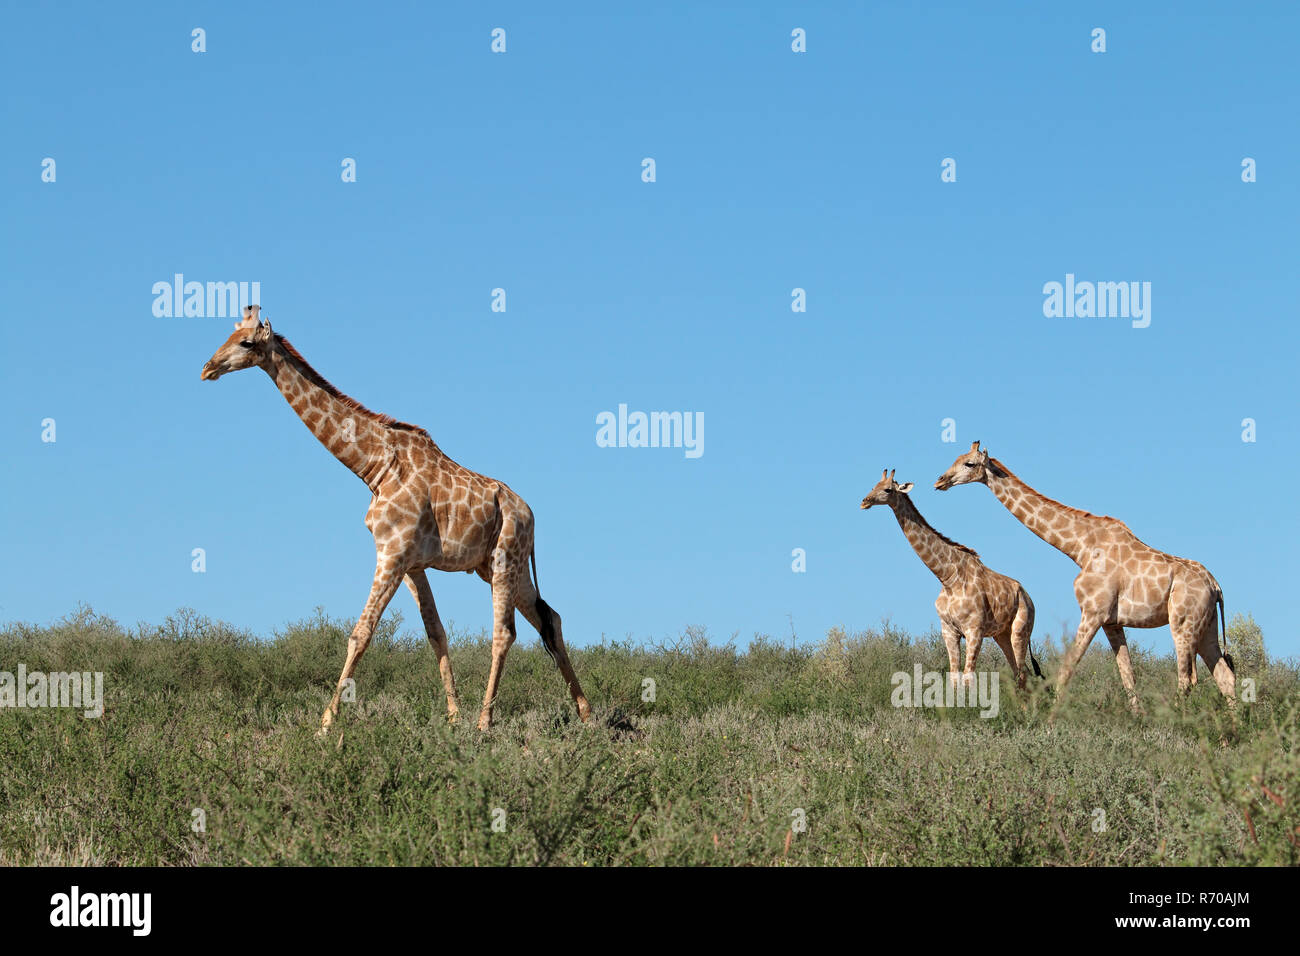 Giraffes against a blue sky Stock Photo